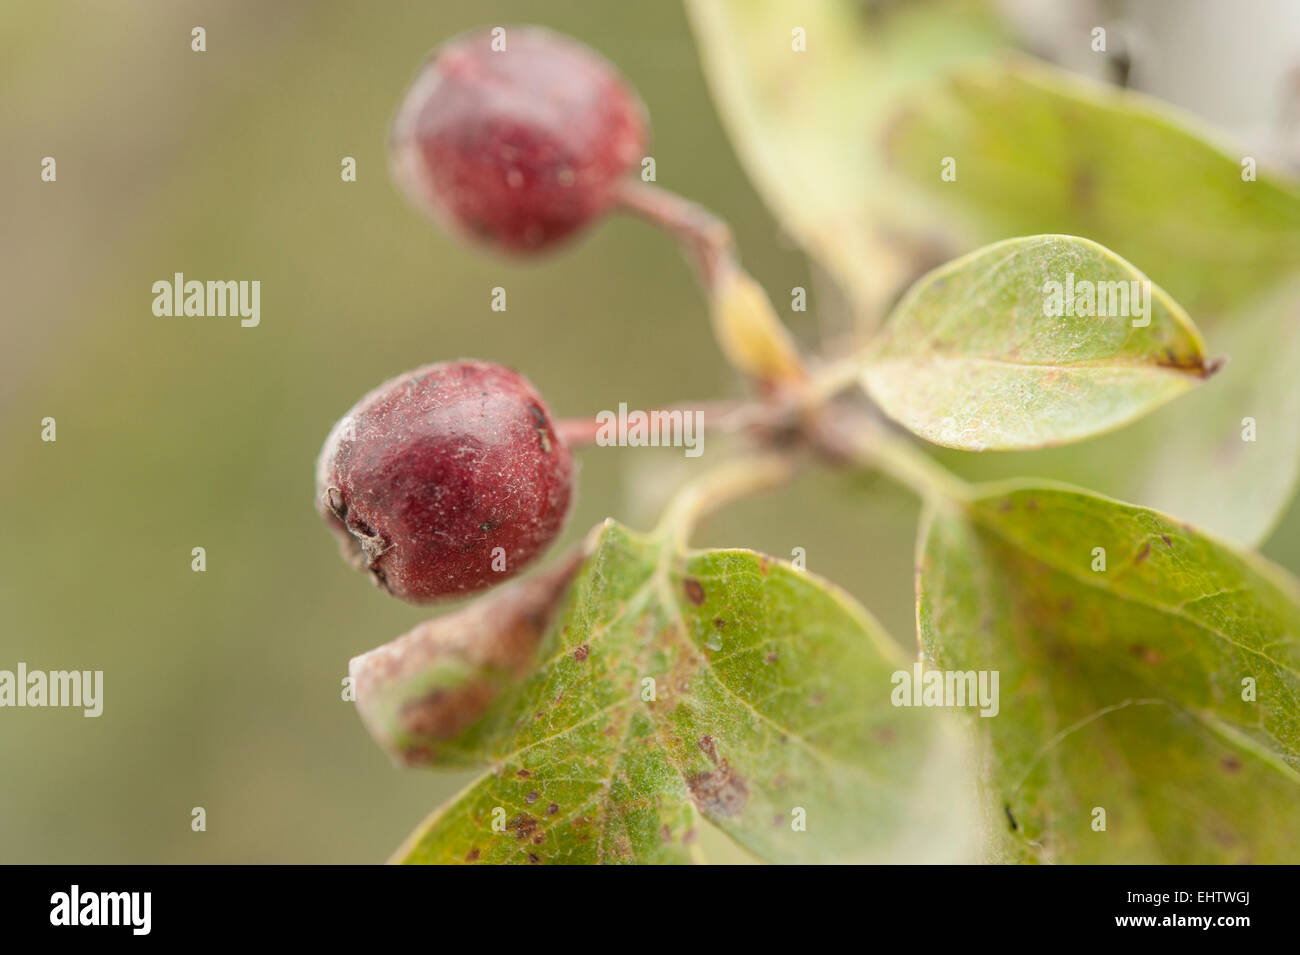 Crataegus or Hawthorne (May-tree) berries in detail. Stock Photo